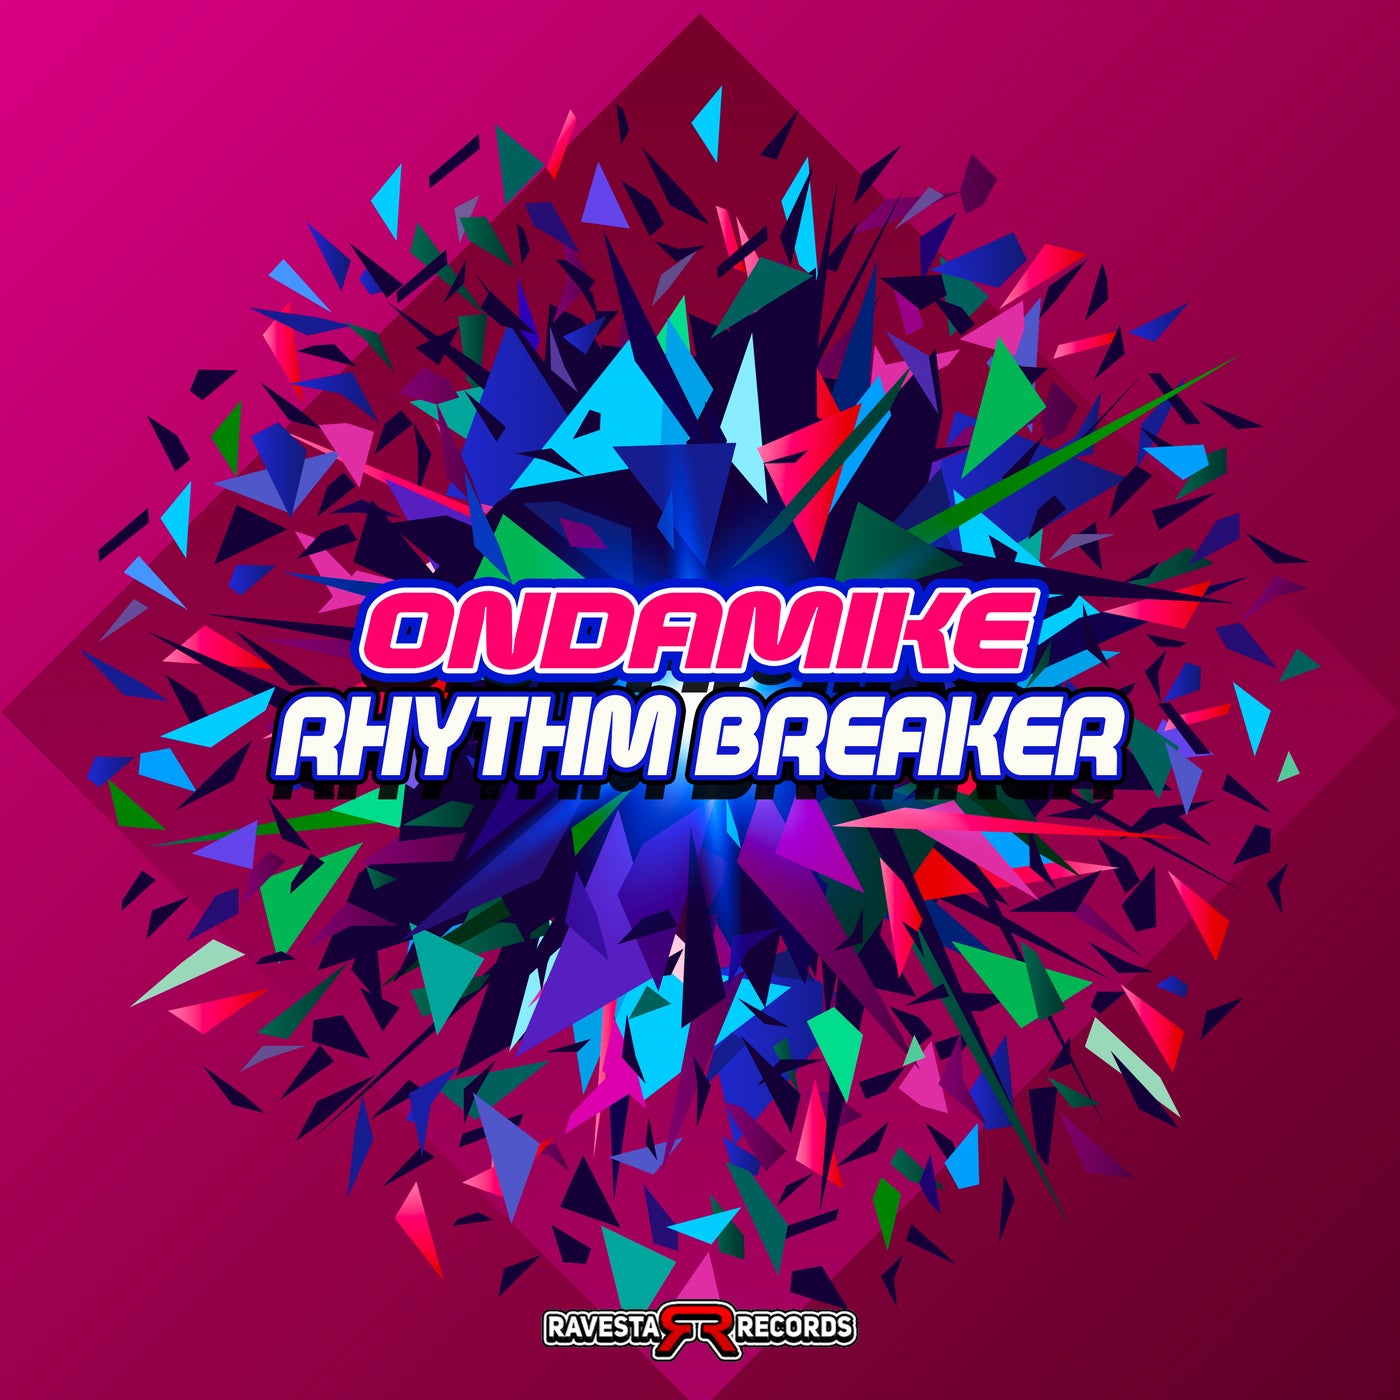 Rhythm Breaker